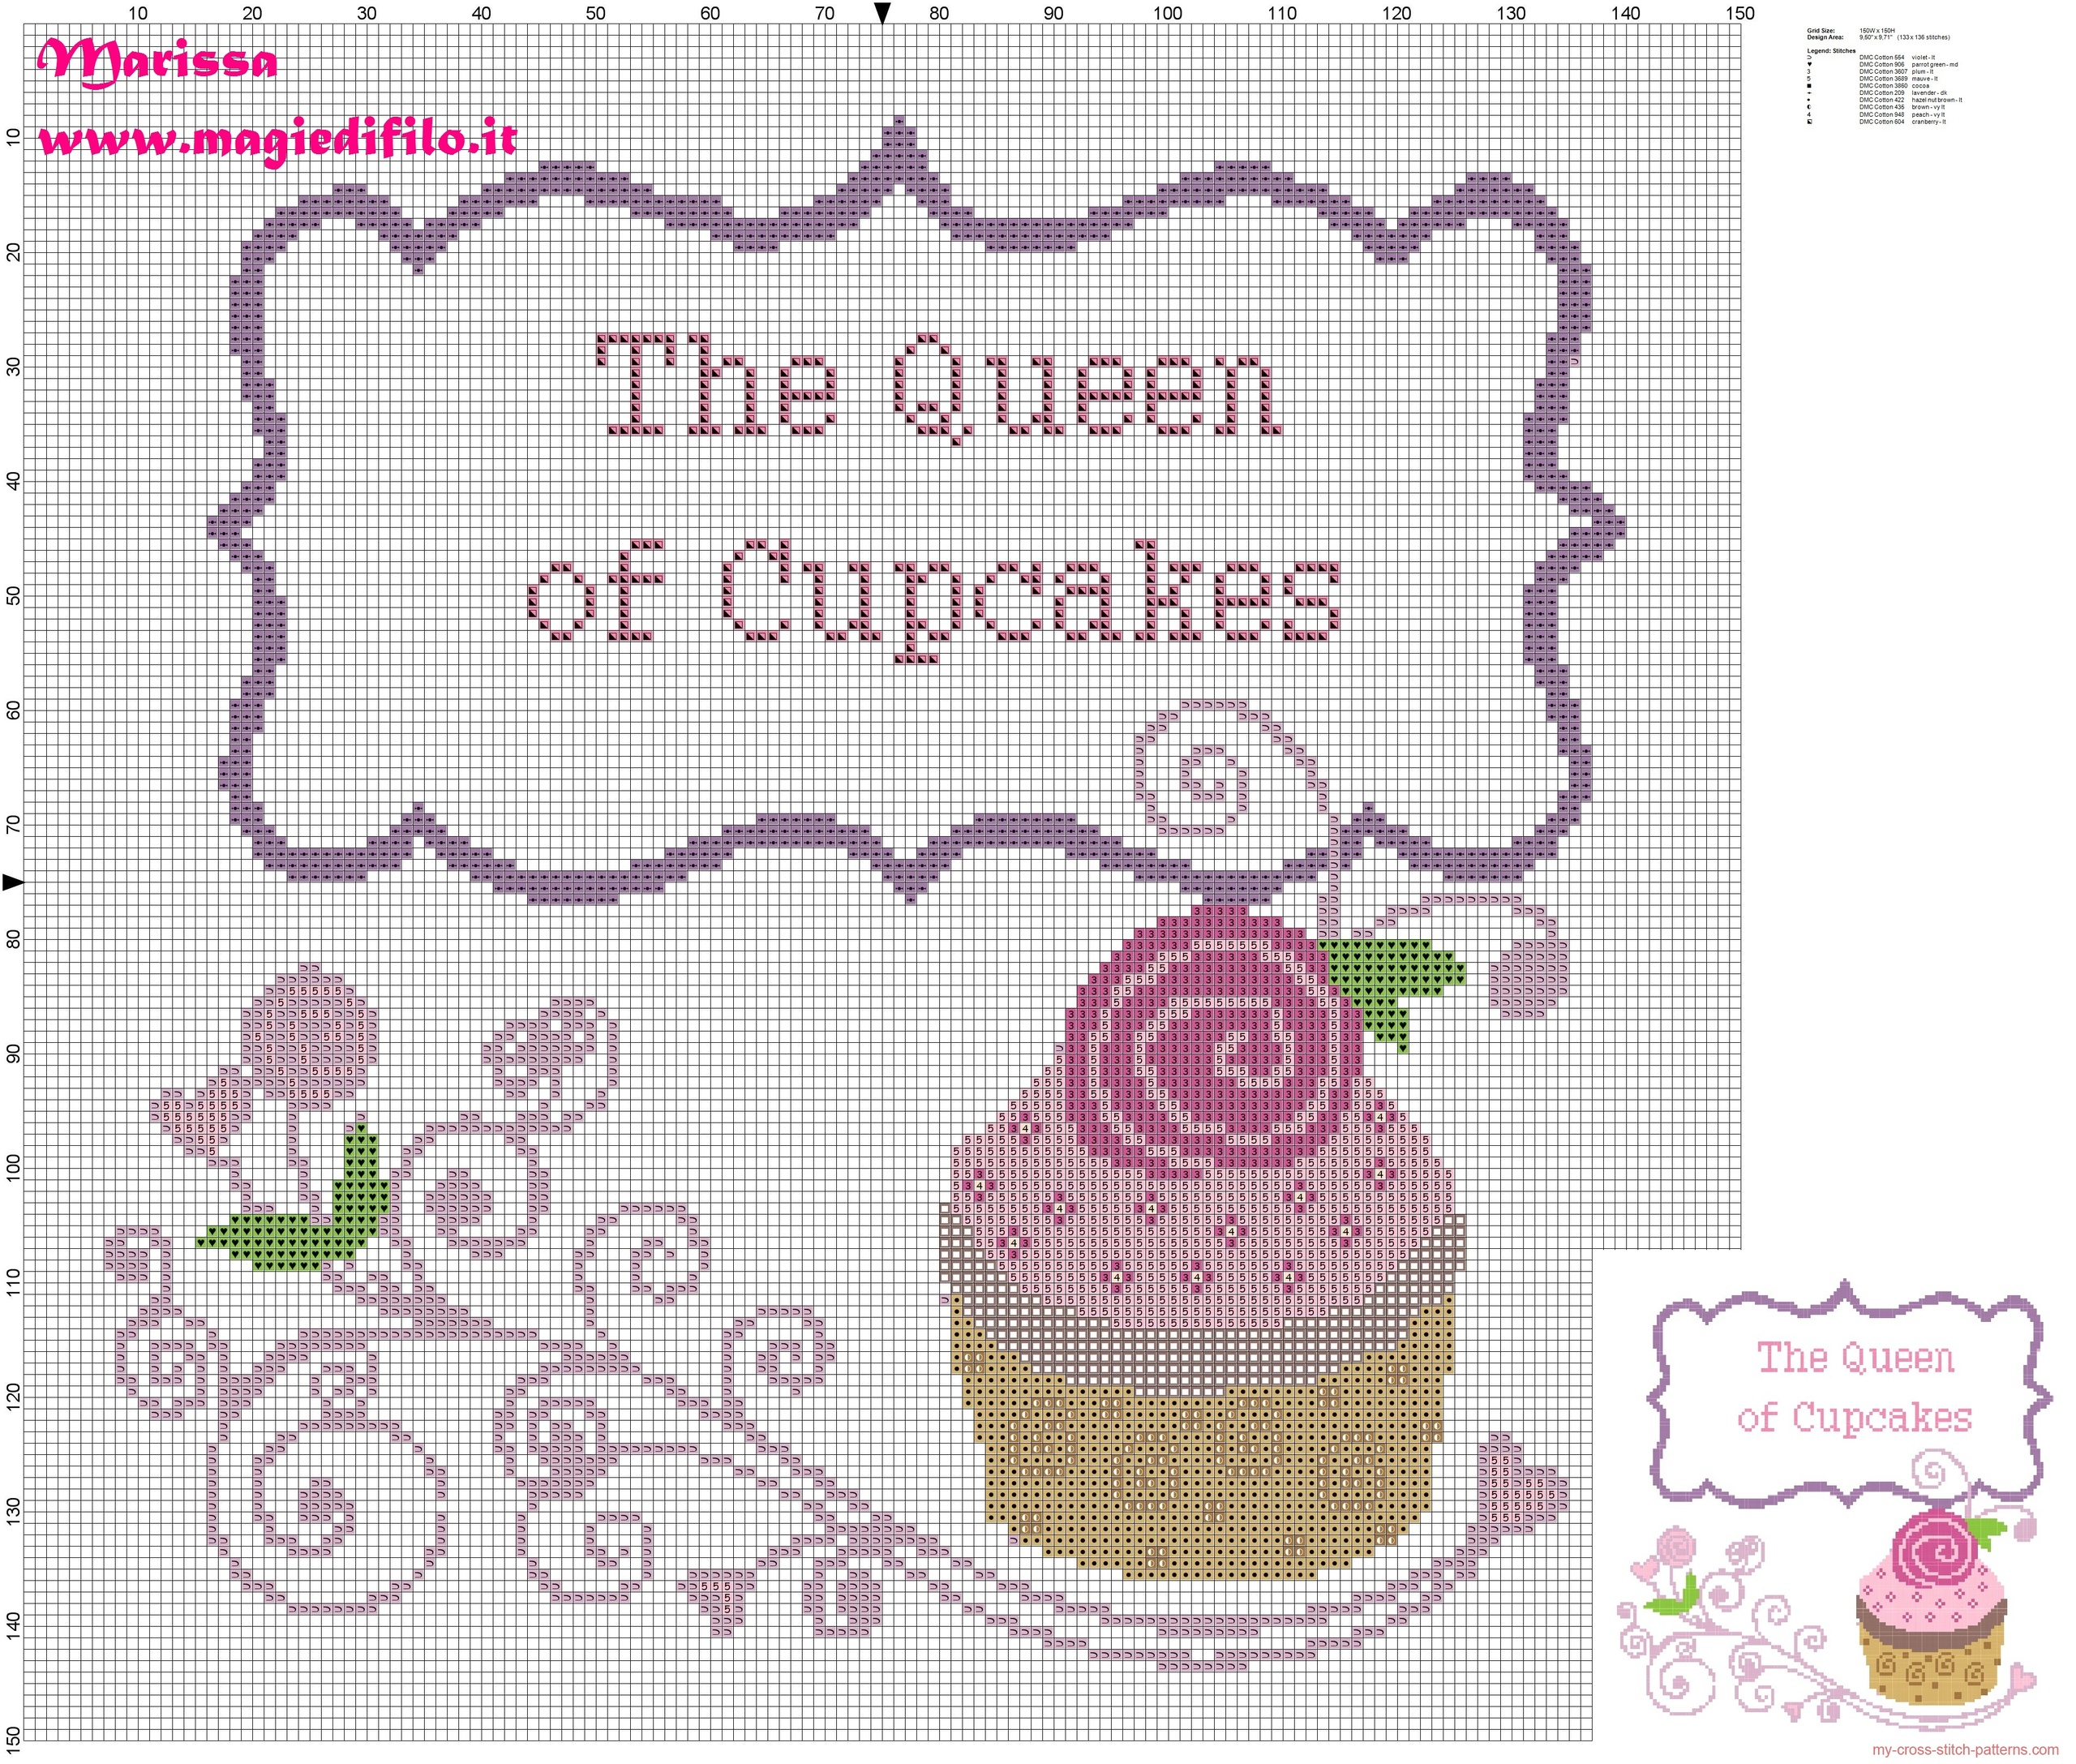 the_quenn_of_cupcakes